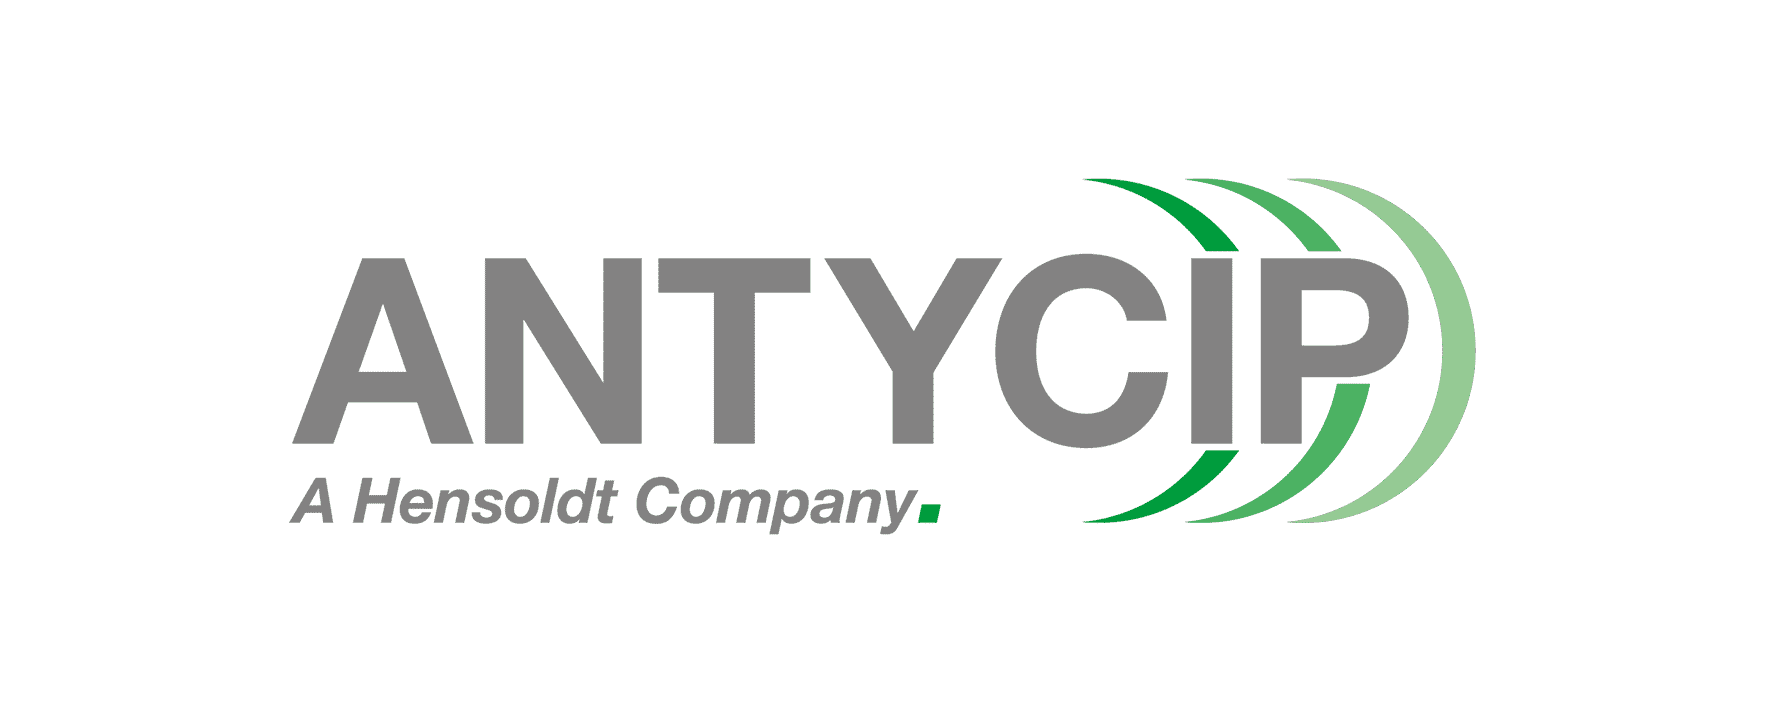 Antycip logo